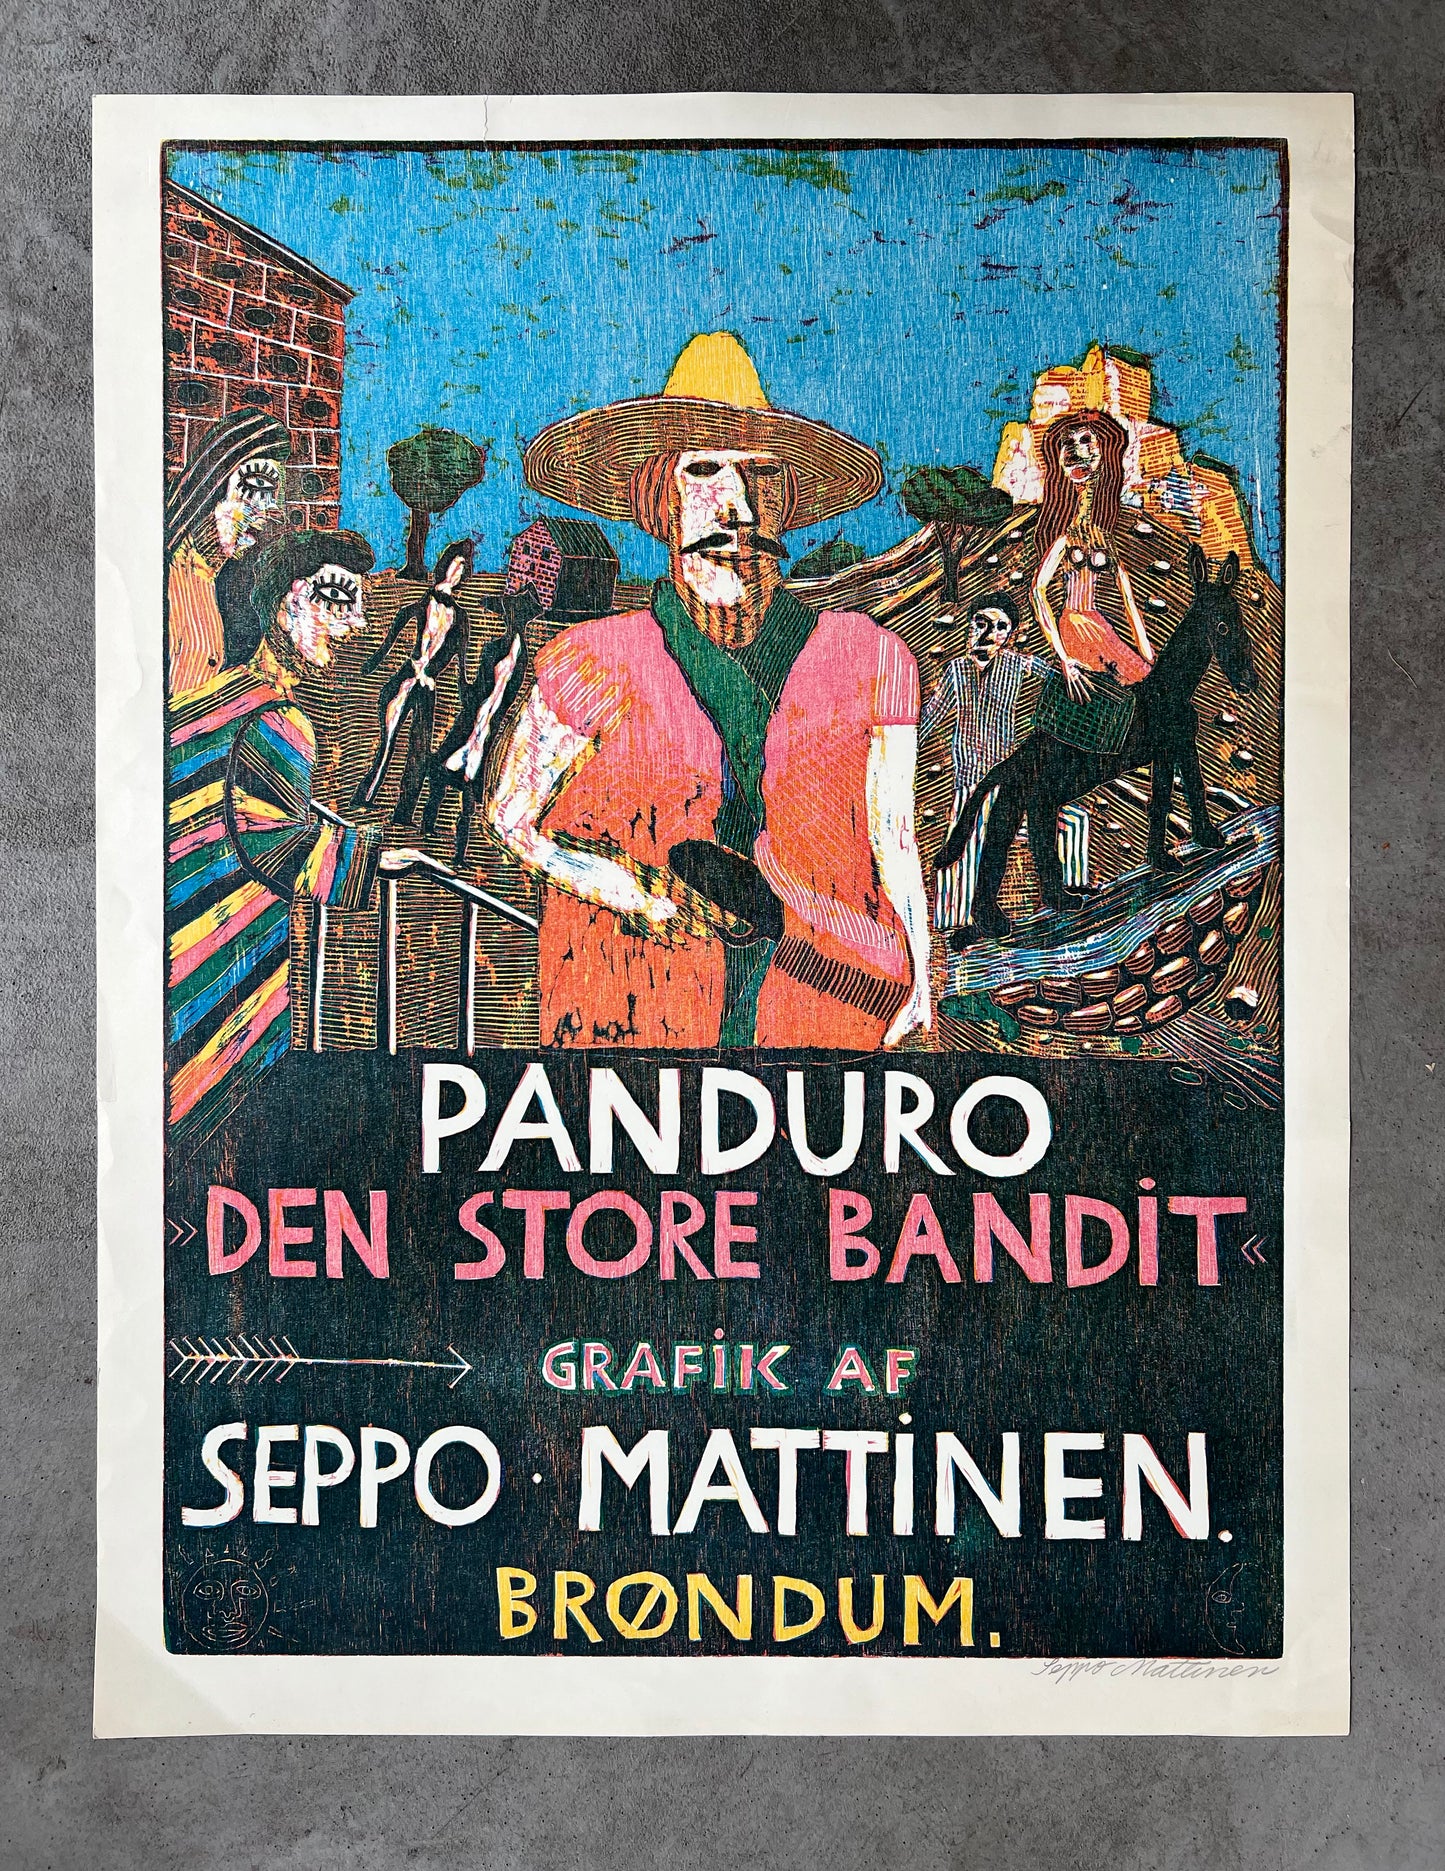 Seppo Mattinen. “Panduro den store bandit”, 1973